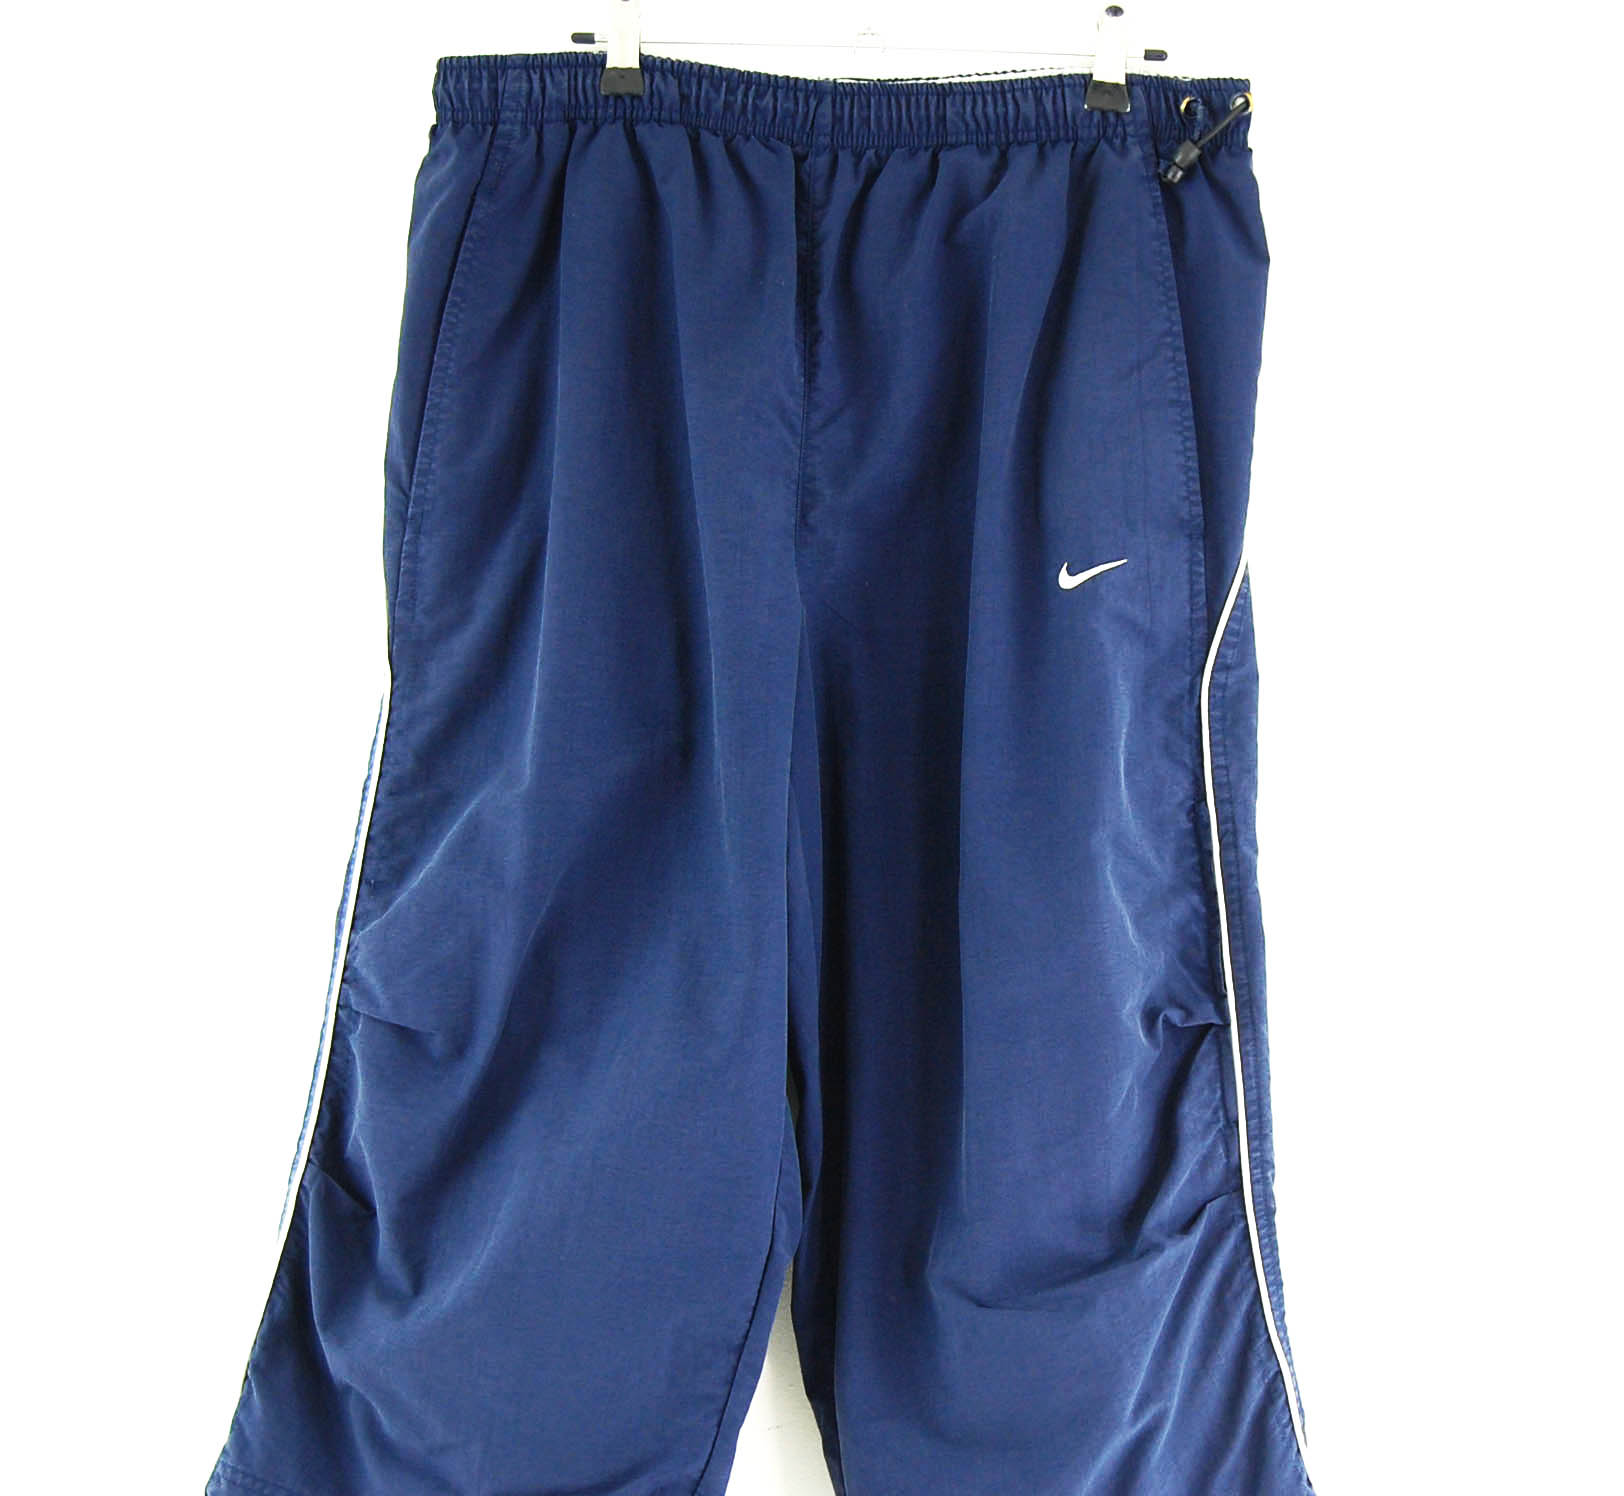 Clan Alentar Silicio Nike 3/4 length shorts - L - Blue 17 Vintage Clothing